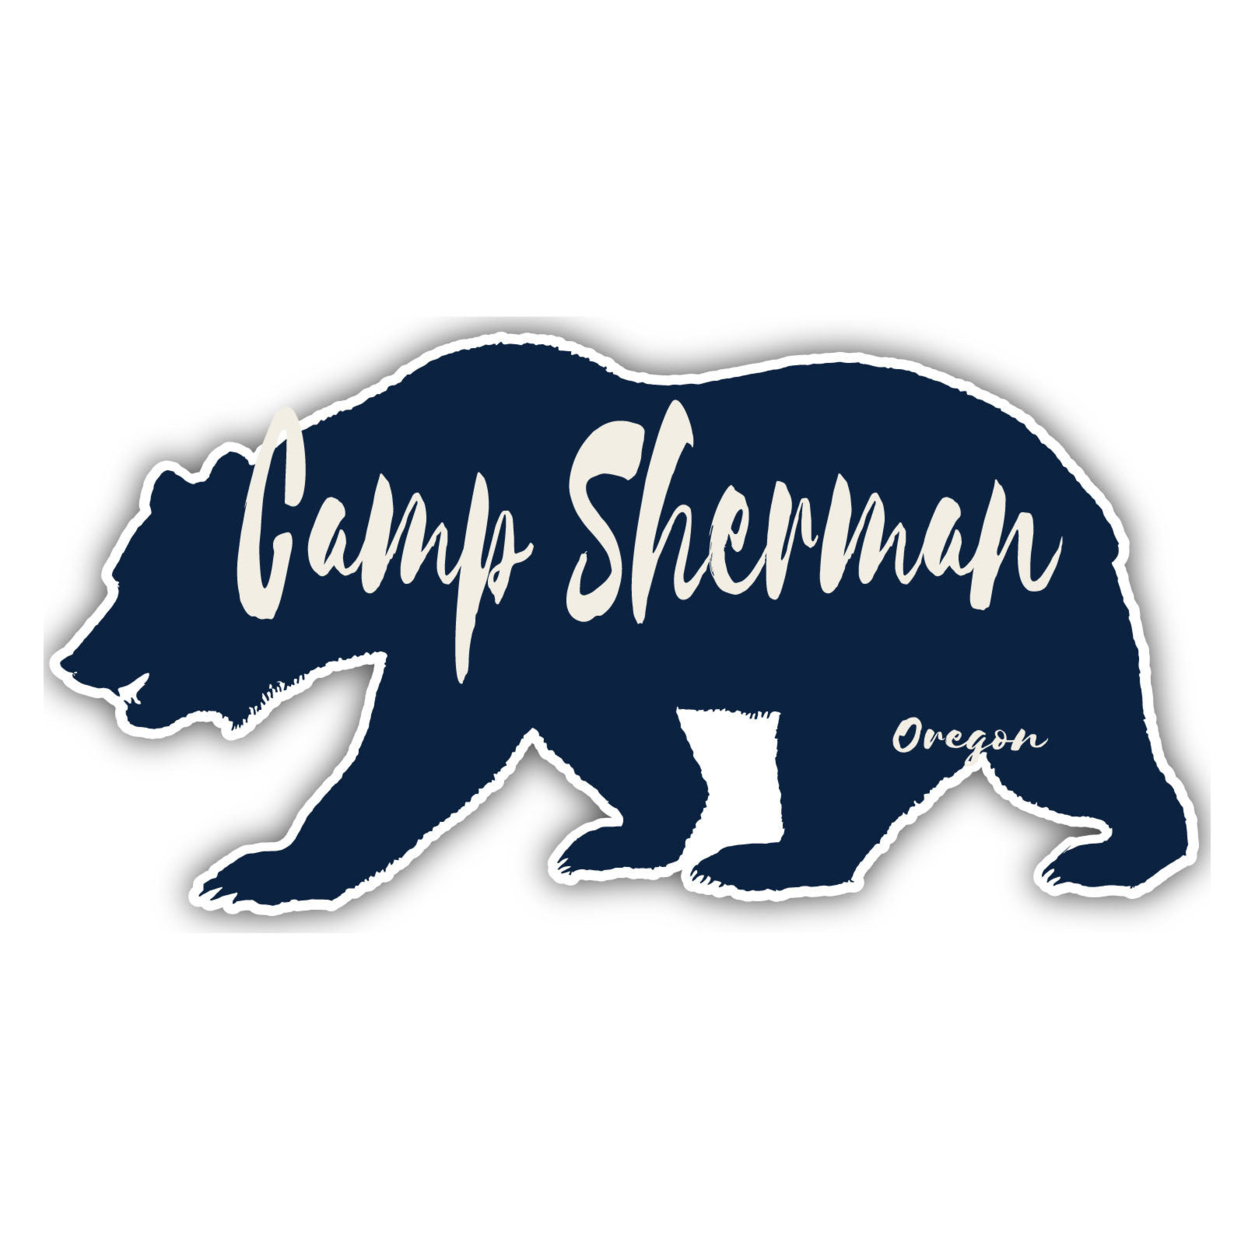 Camp Sherman Oregon Souvenir Decorative Stickers (Choose Theme And Size) - 4-Pack, 6-Inch, Bear